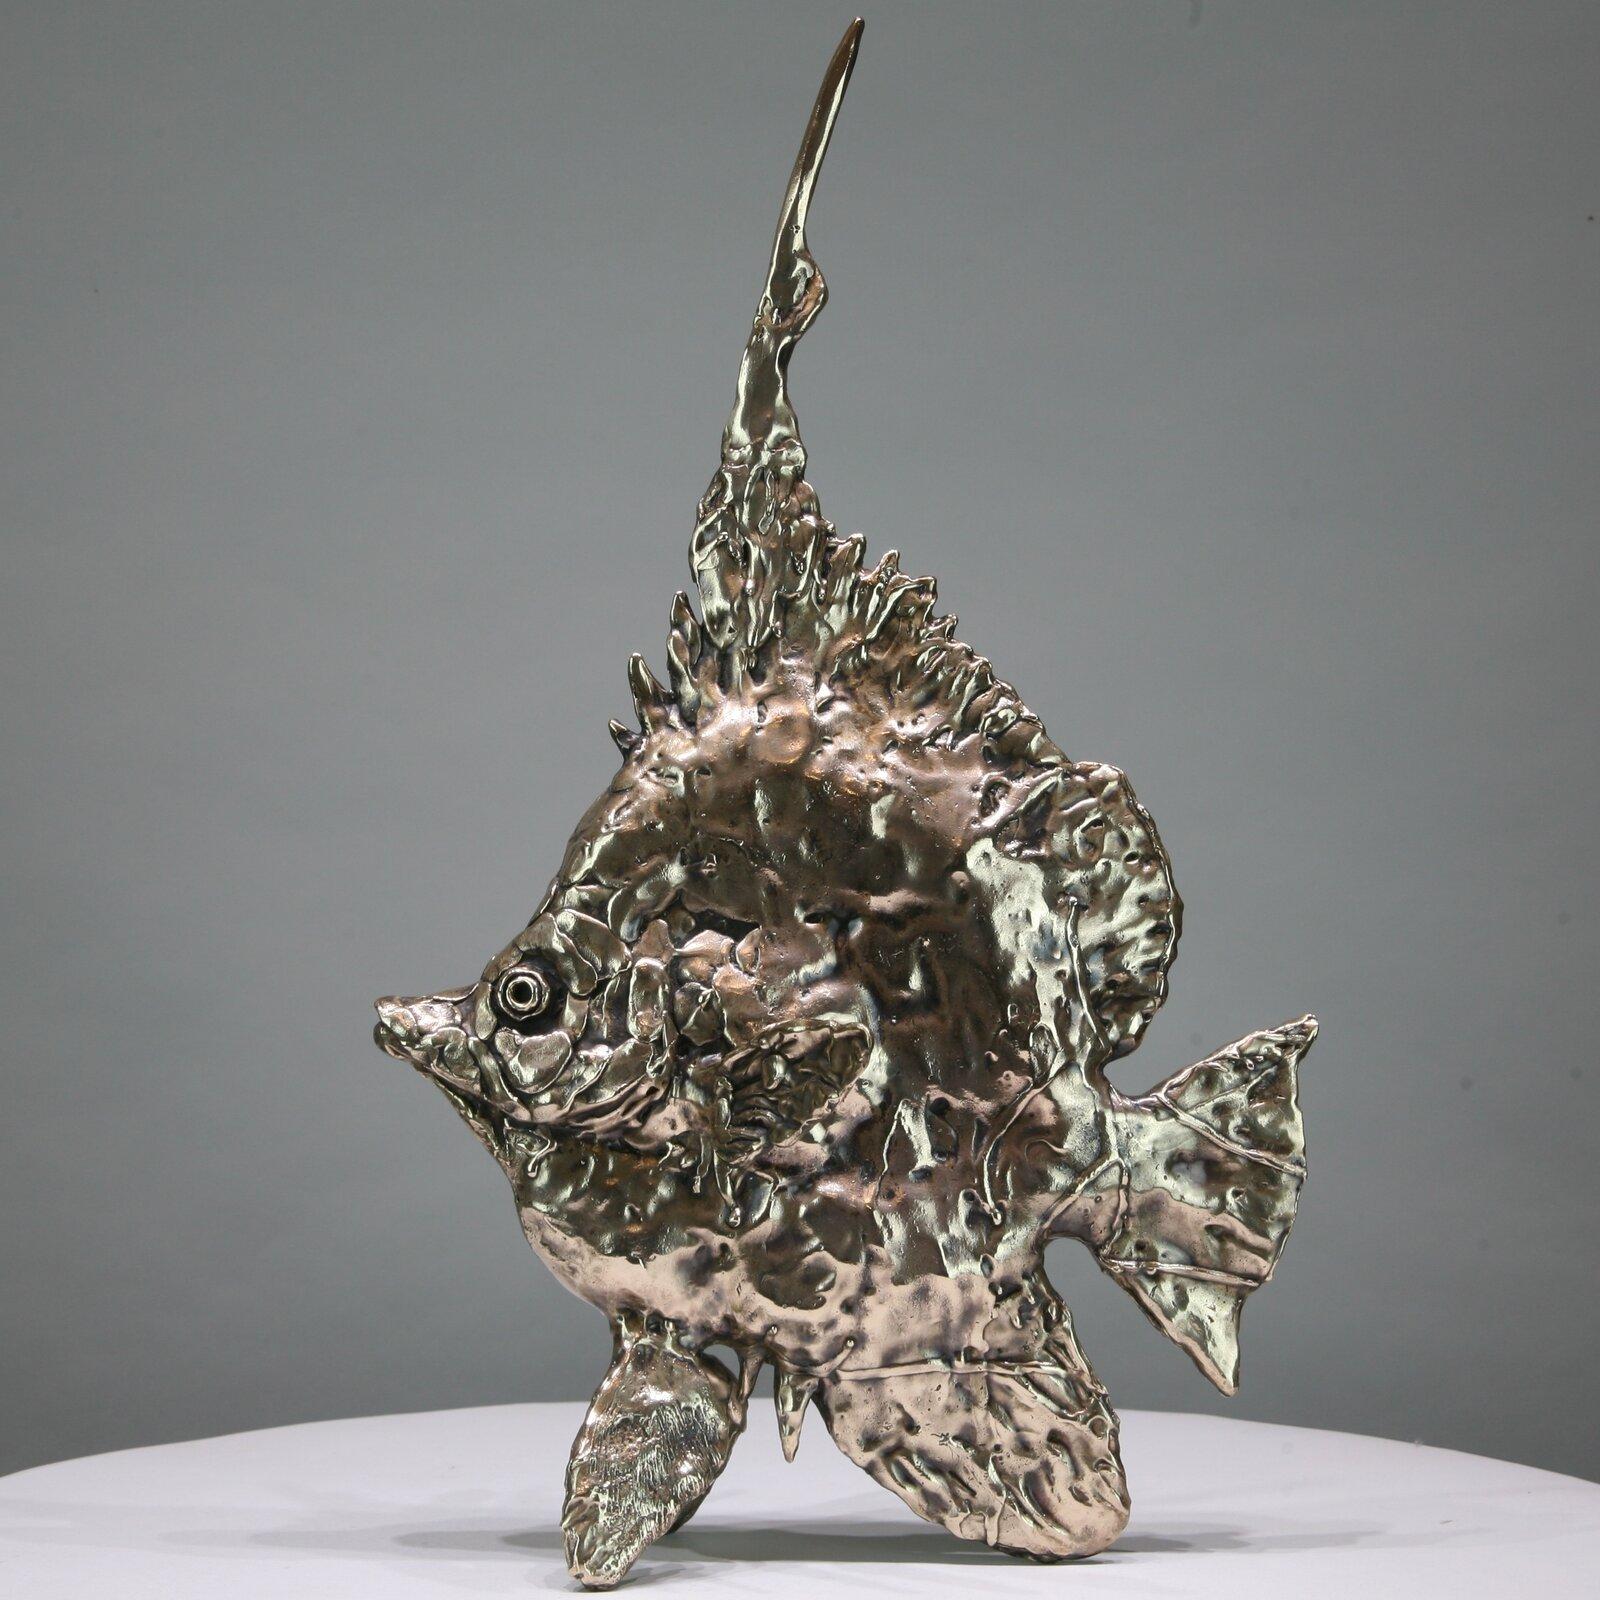 Sea Angel Fish-original bronze wildlife sculpture-artwork-contemporary Art